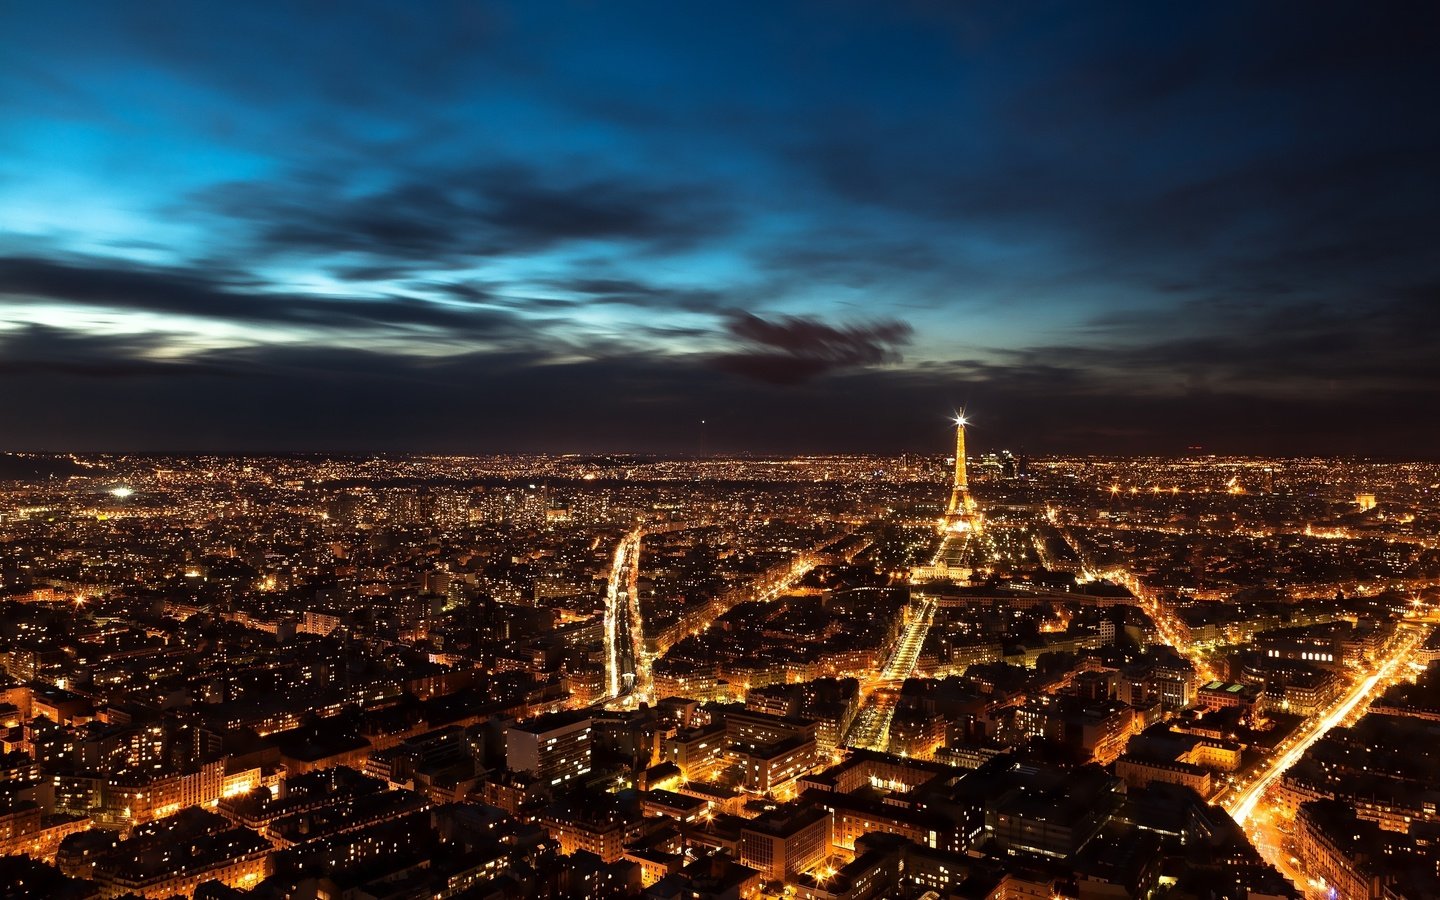 Париж Эйфелева башня ночью панорама